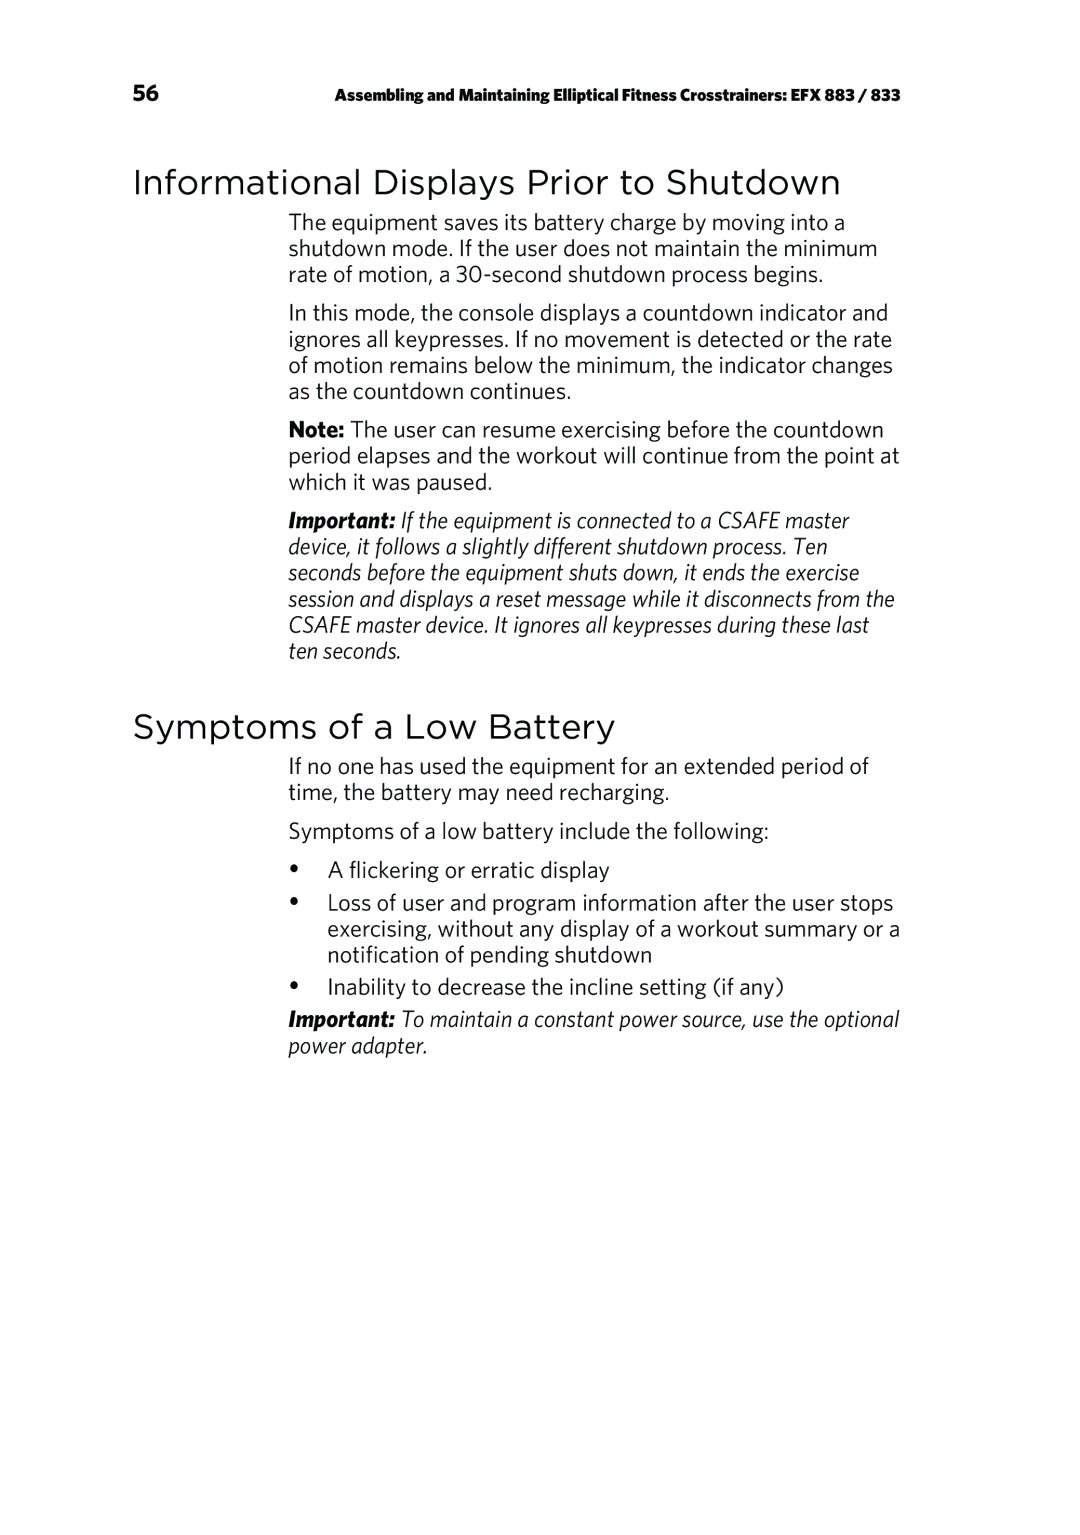 Precor P80 manual Informational Displays Prior to Shutdown, Symptoms of a Low Battery 